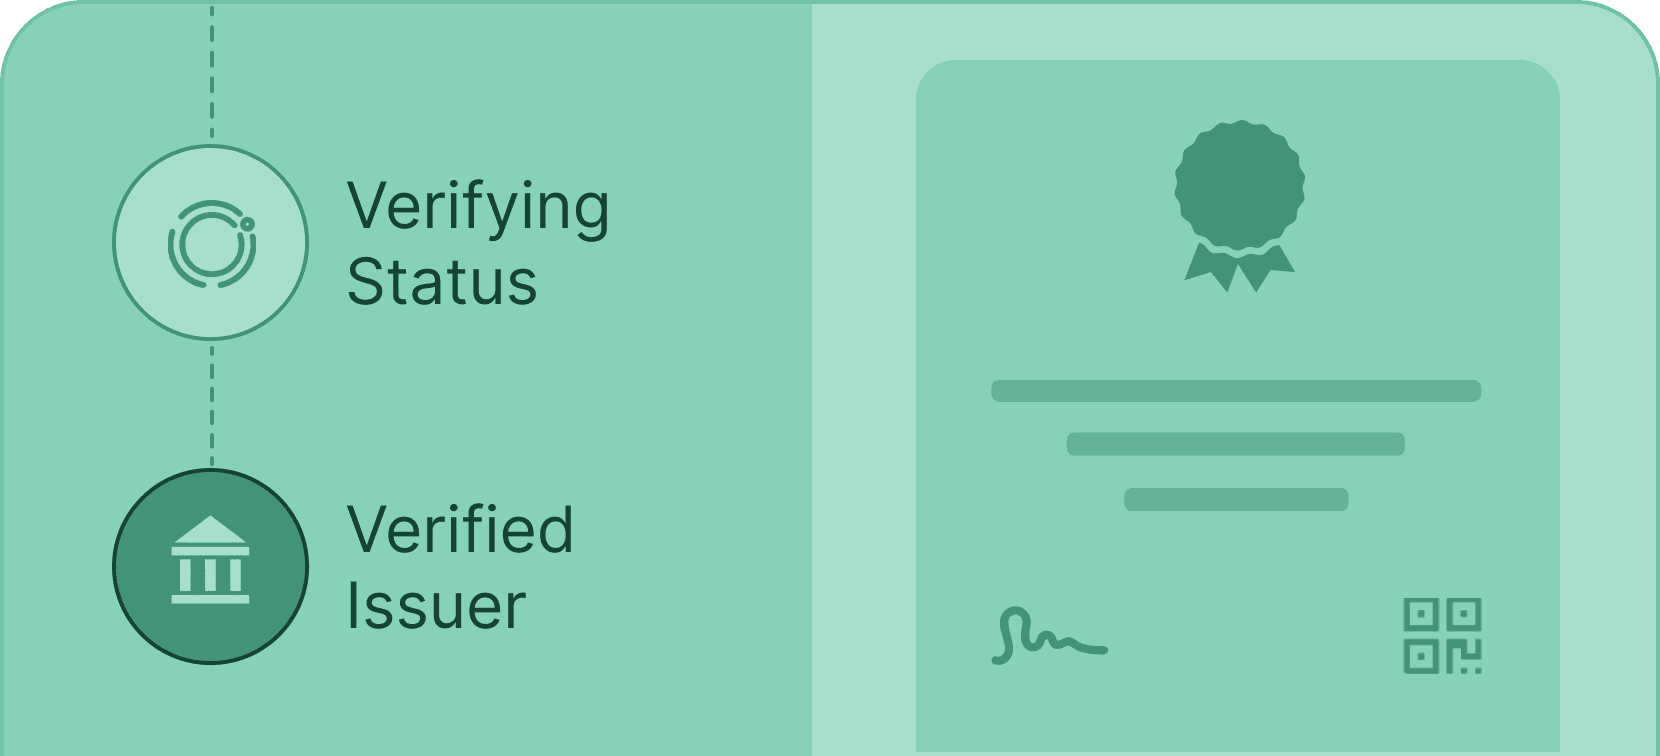 Verify issuer status - Certifier features